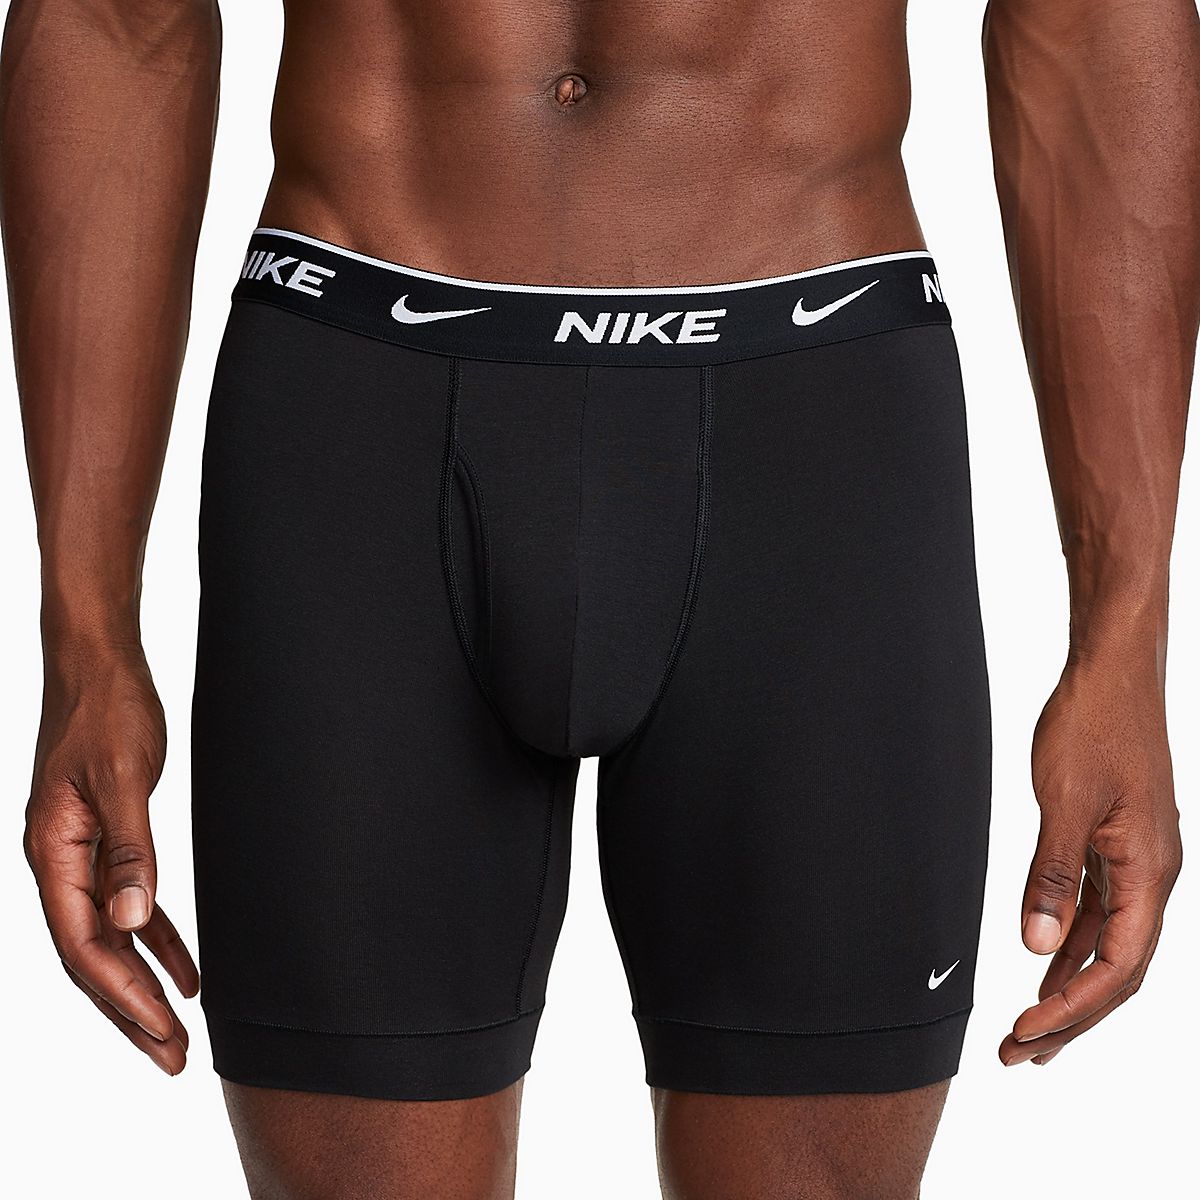 Nike Men's Essential Cotton Stretch Long Boxer Briefs 3-Pack